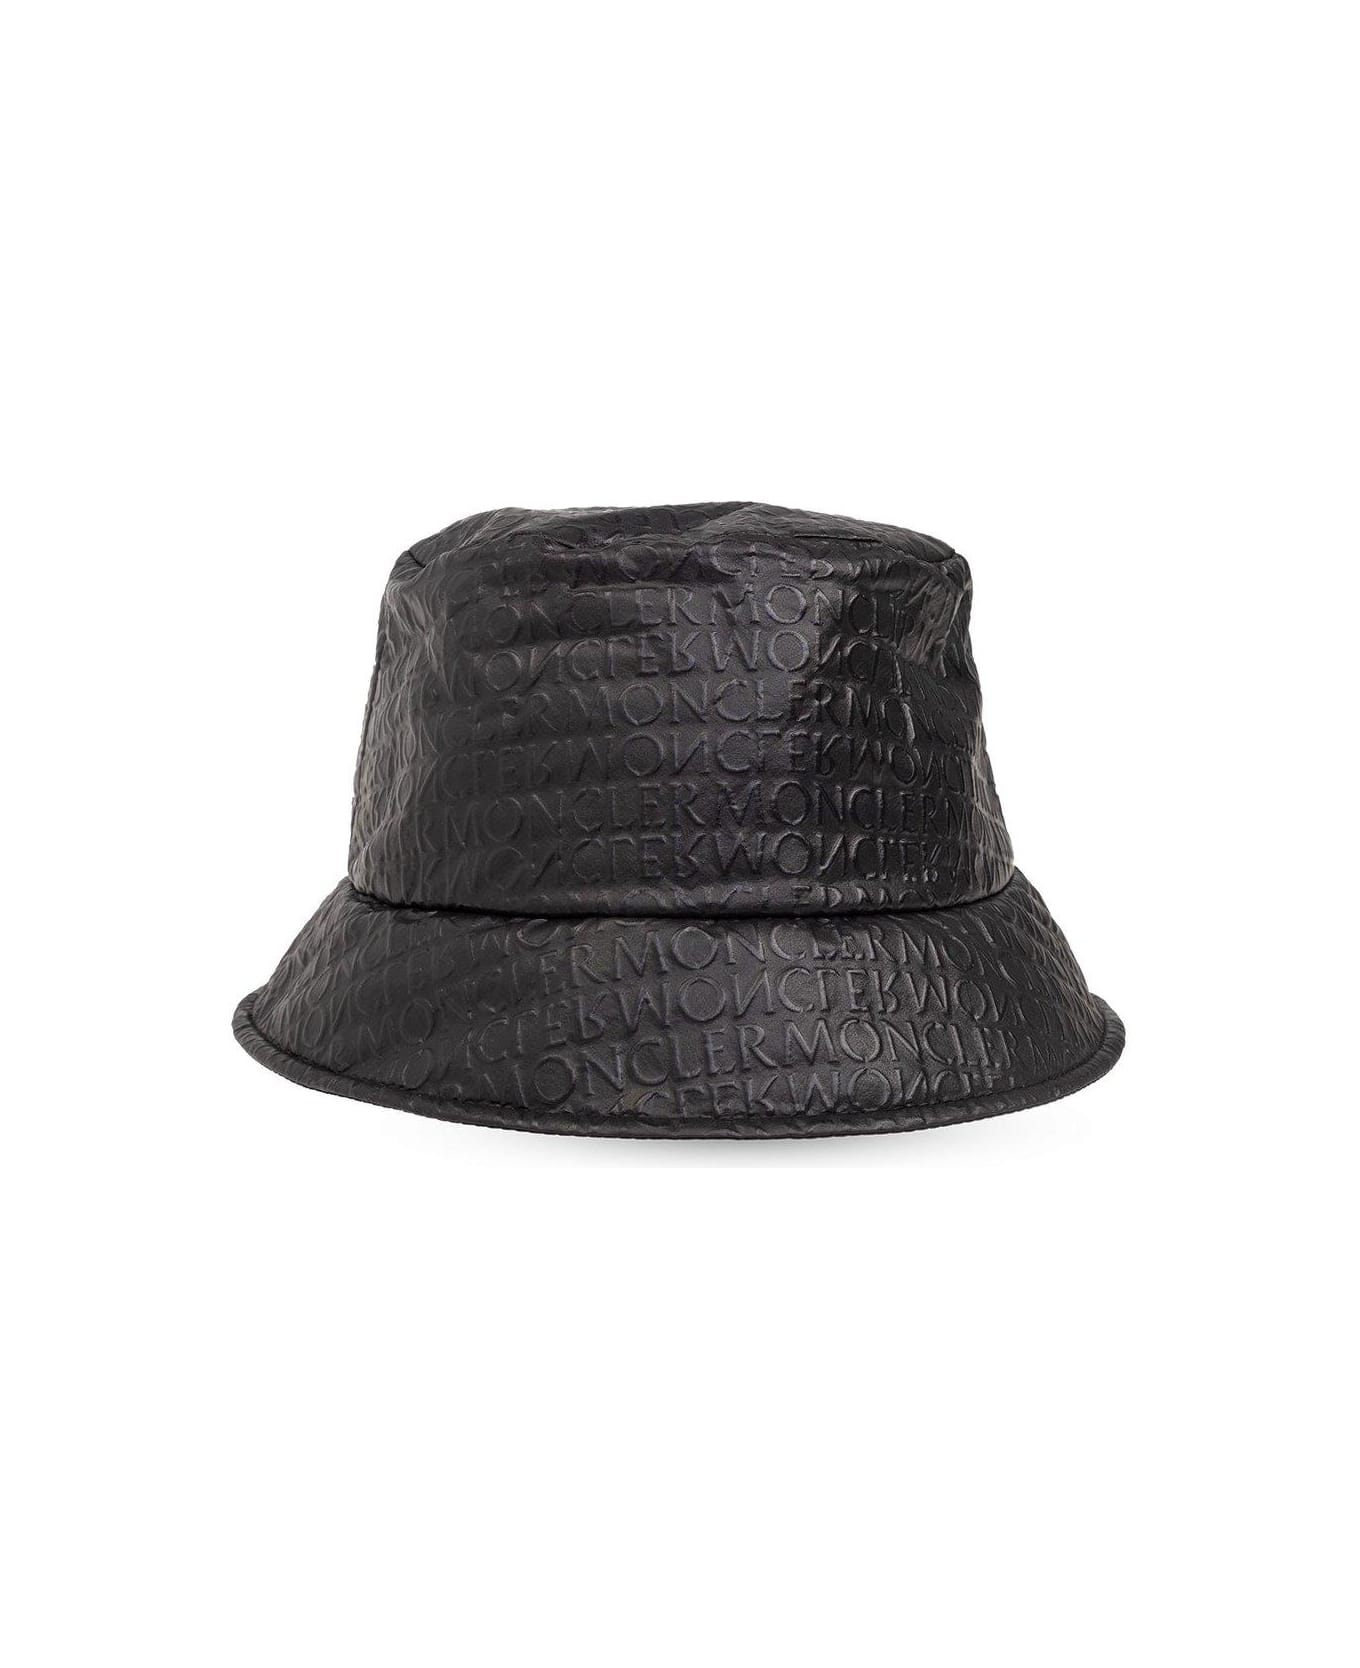 Moncler Reversible Padded Bucket Hat - Black